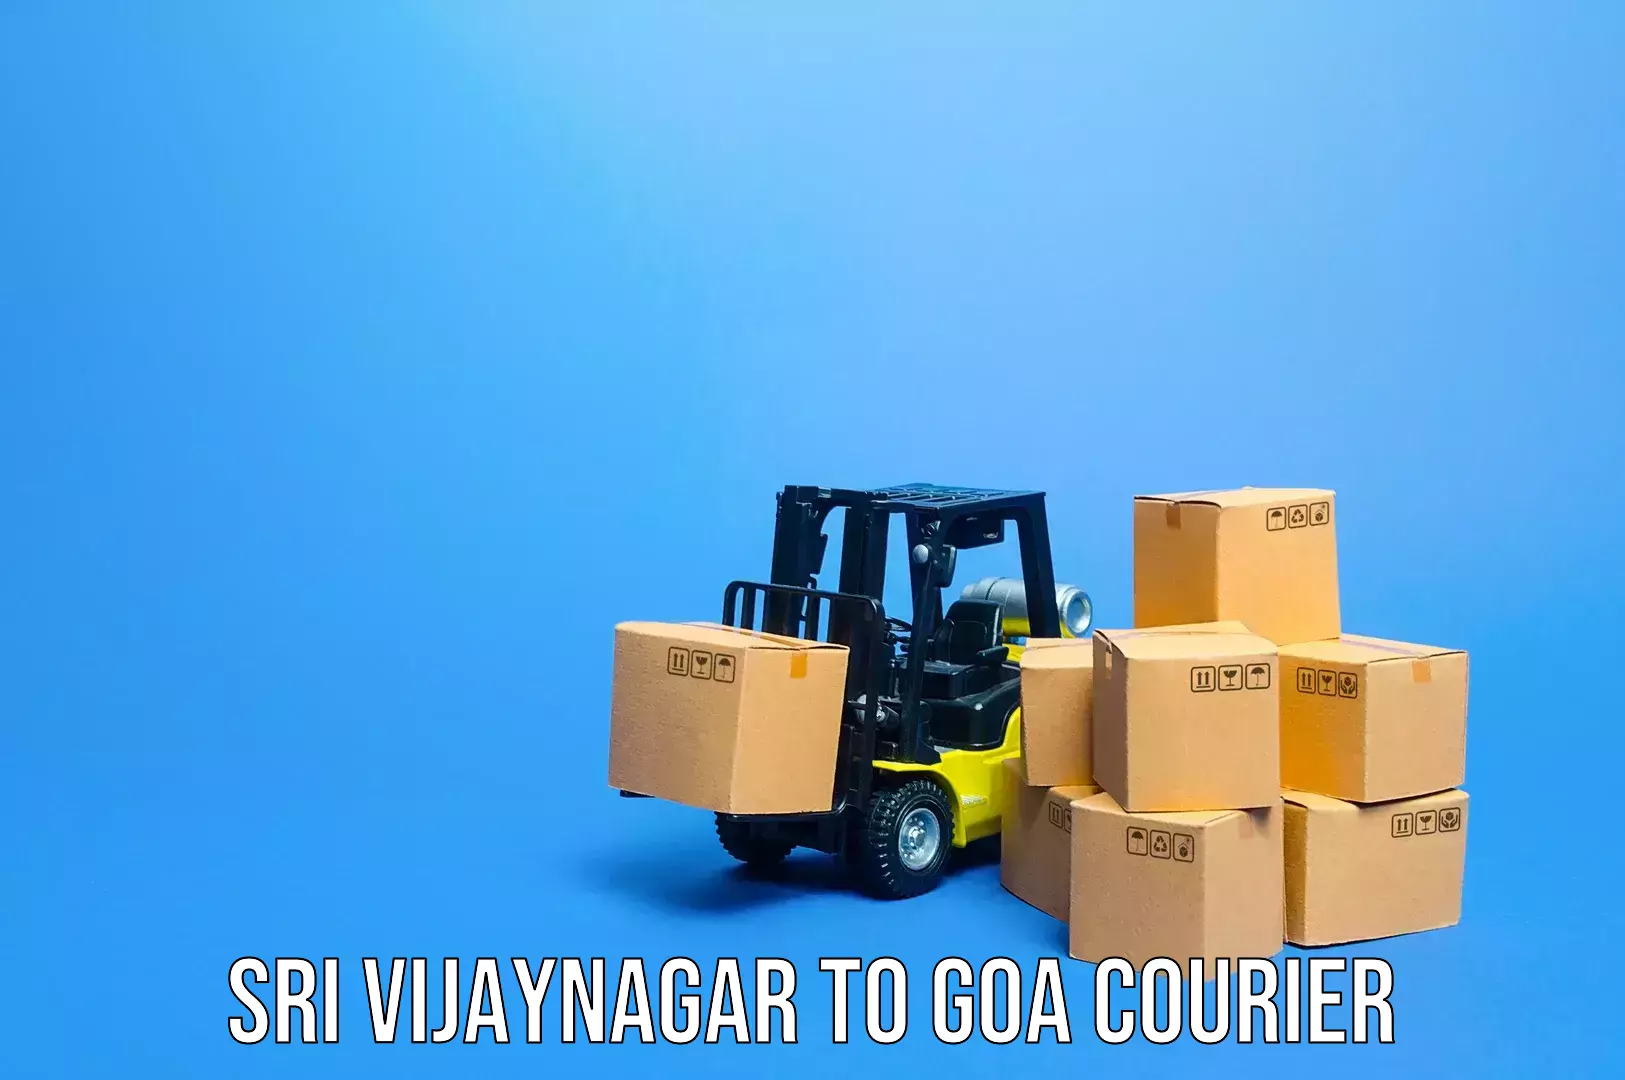 Luggage shipment specialists Sri Vijaynagar to Goa